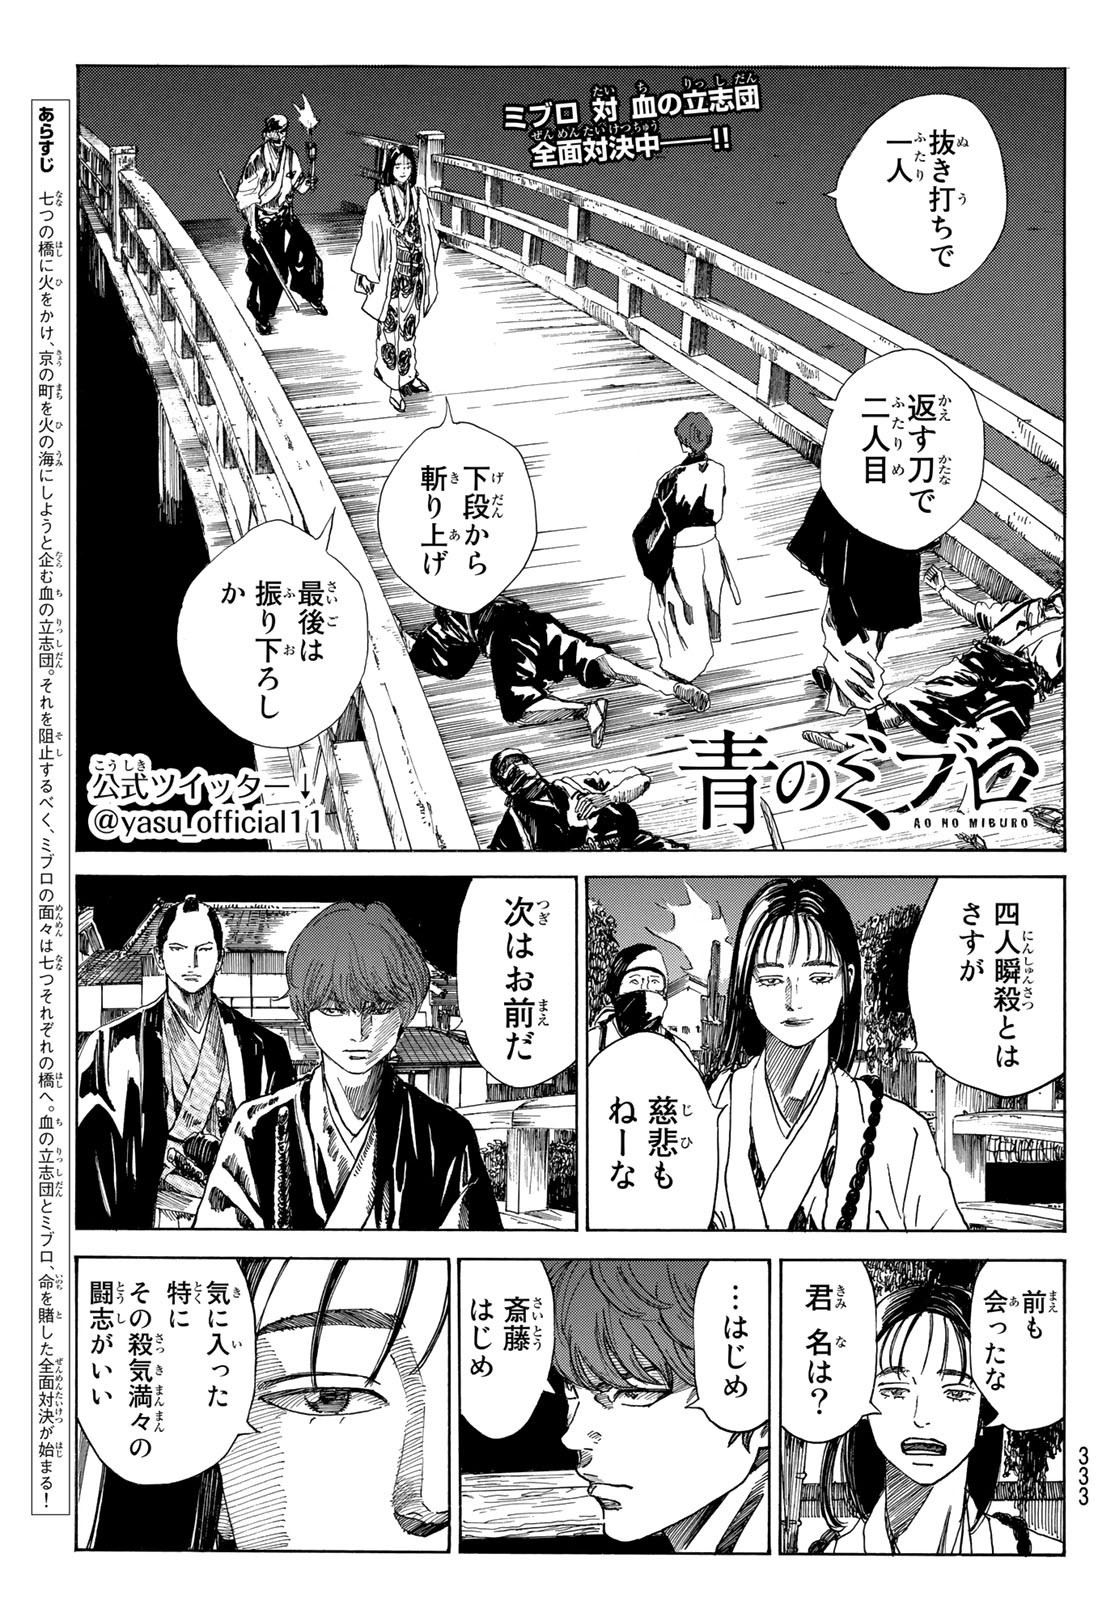 Ao no Miburo - Chapter 056 - Page 1